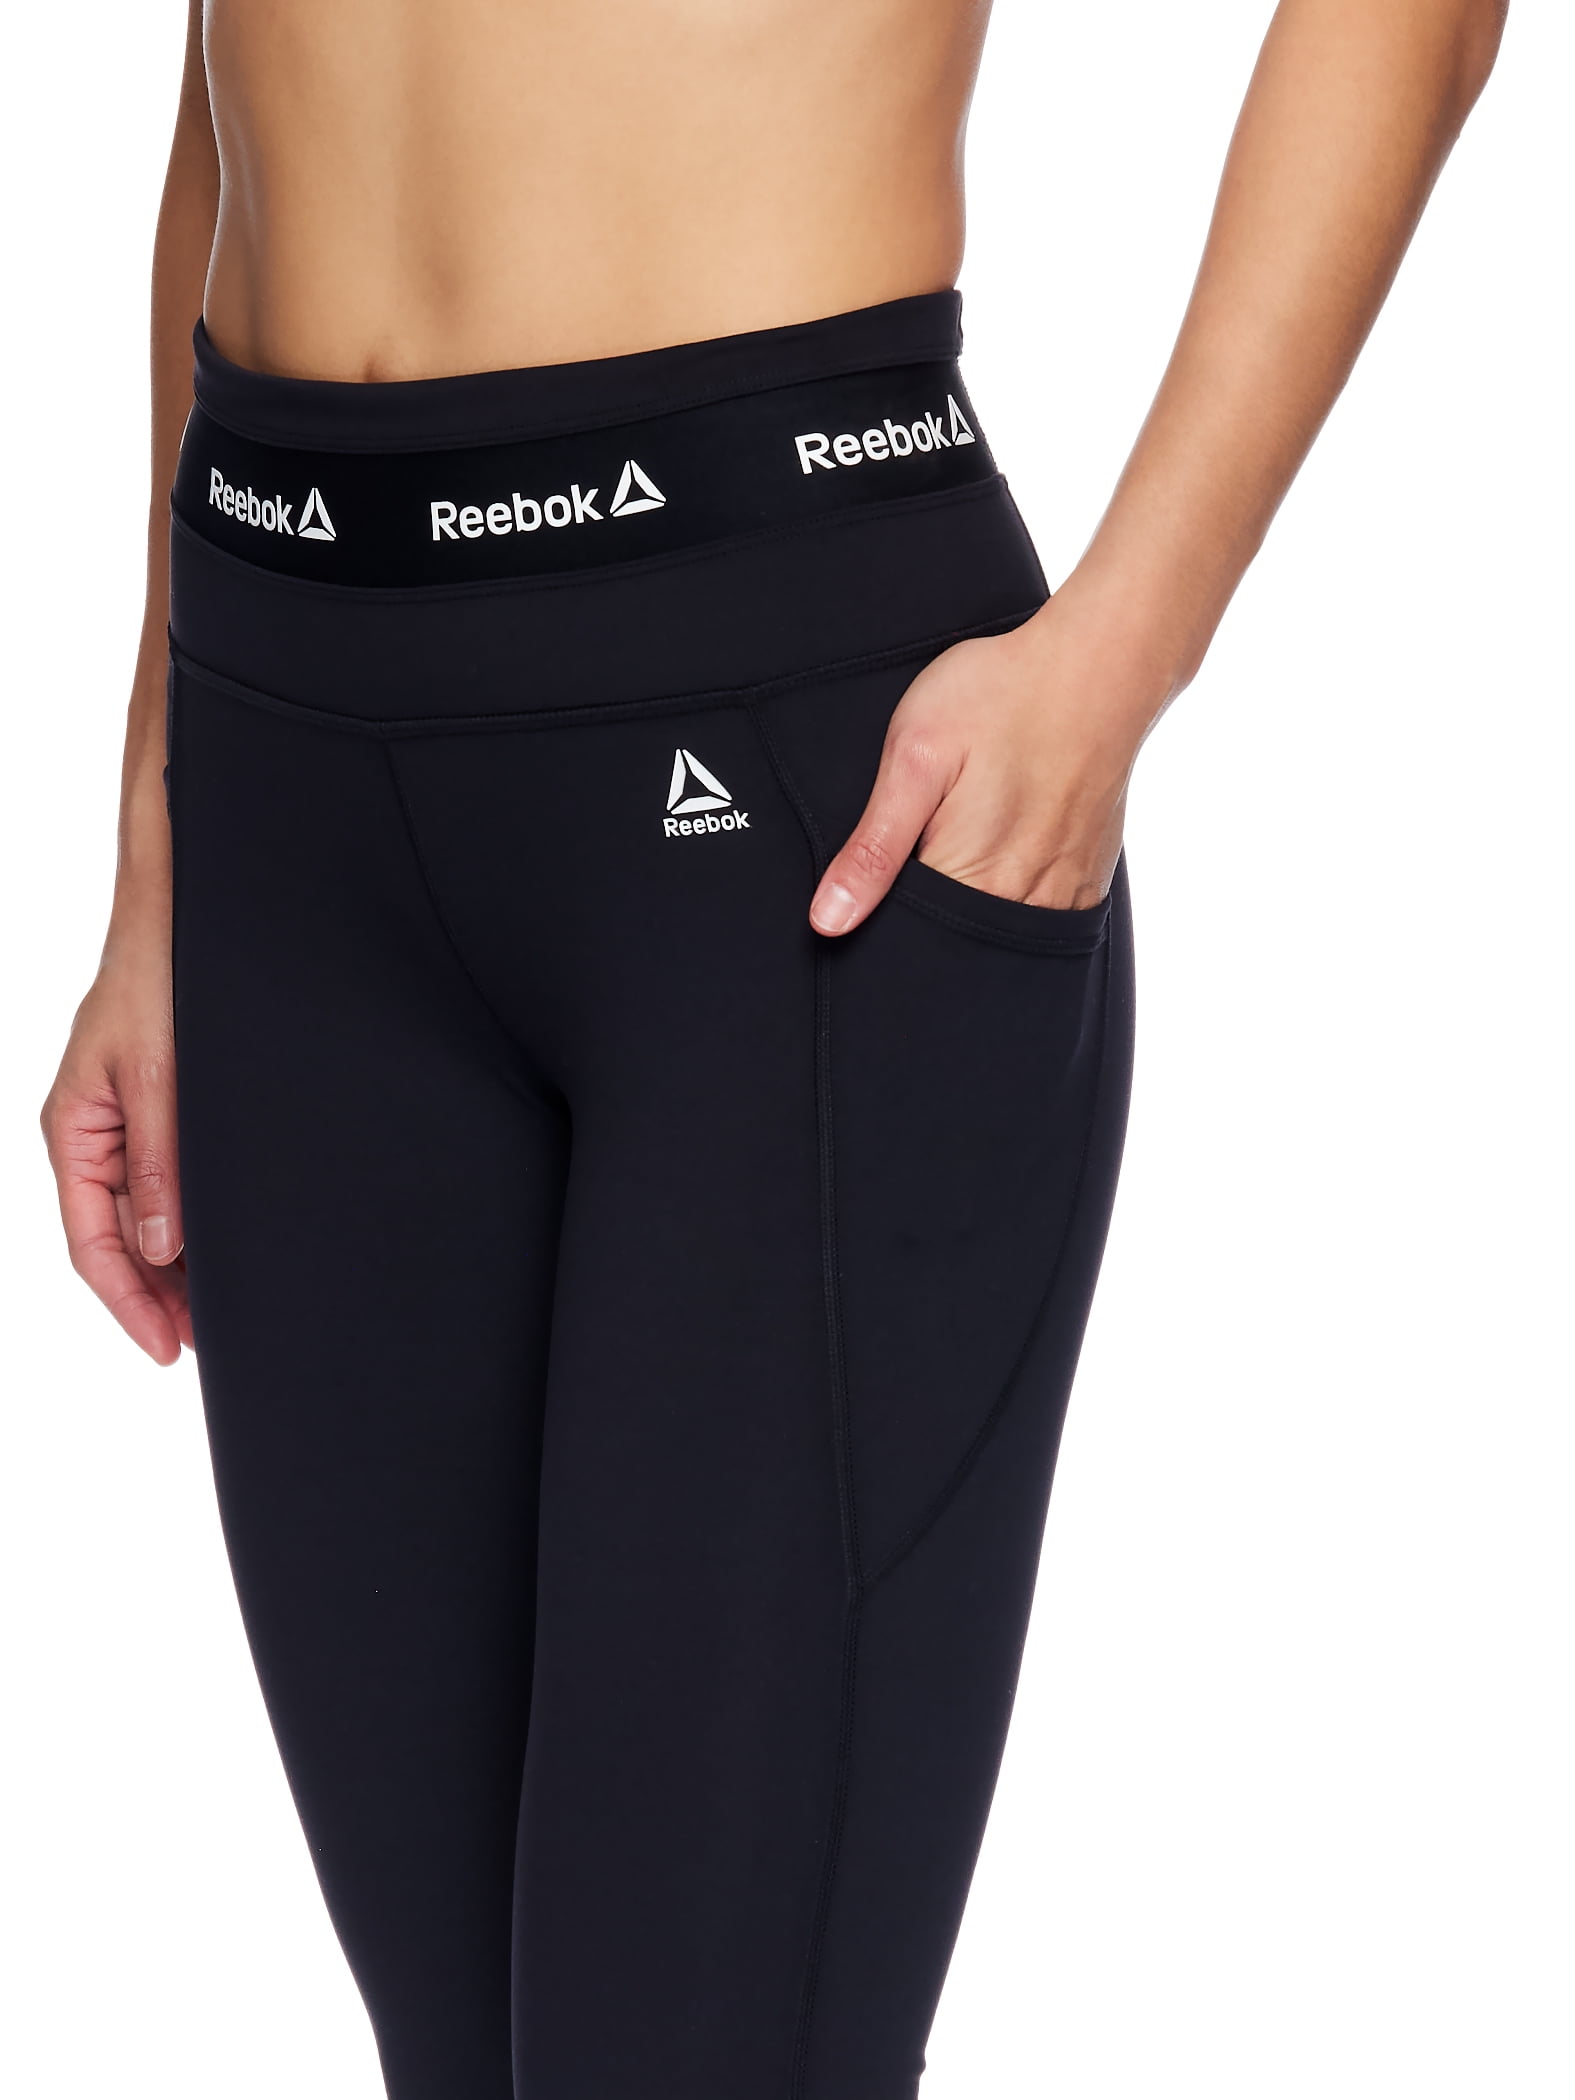 Reebok Black Speedwick Capri Athletic Gym Leggings Size Medium  Galaxy  print leggings, Women's athletic leggings, Reebok leggings